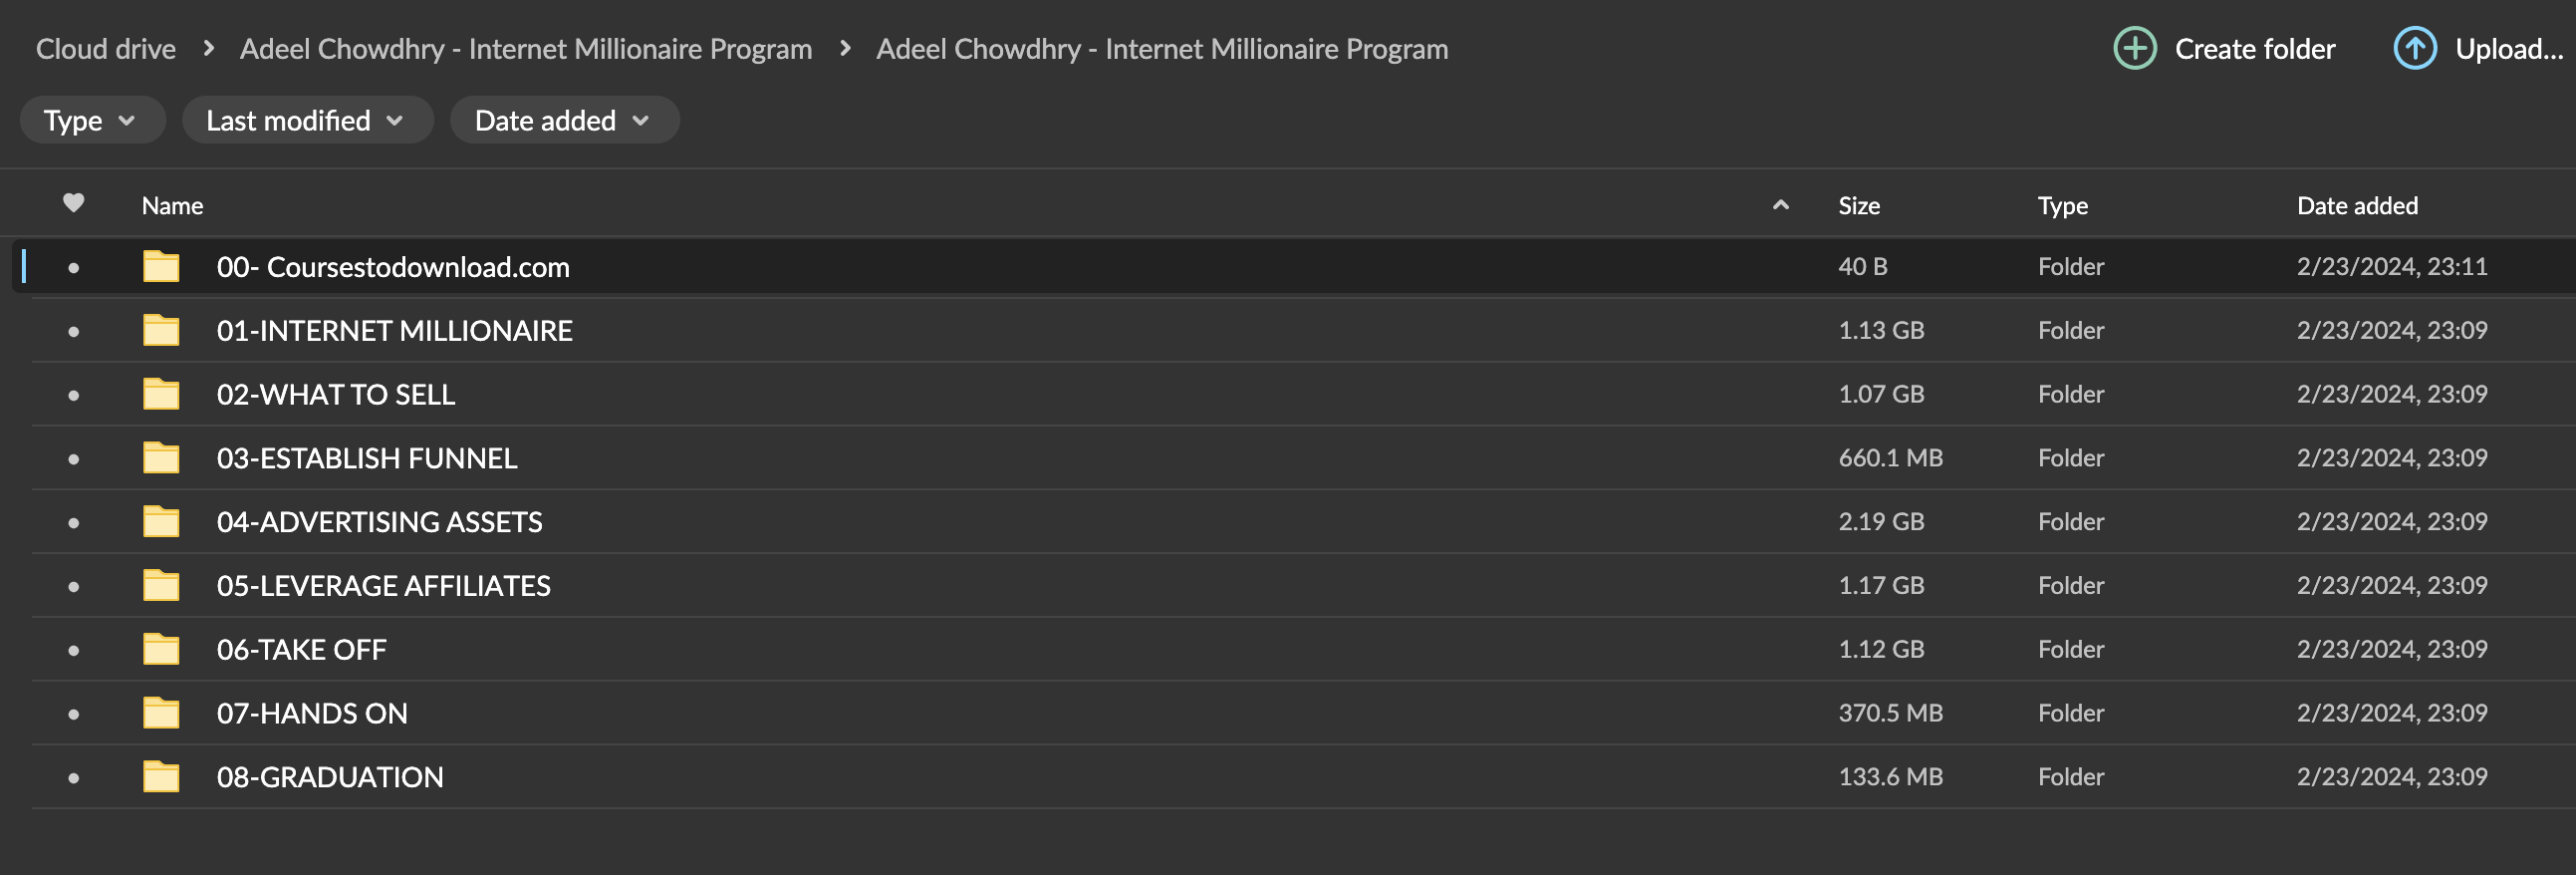 Adeel Chowdhry - Internet Millionaire Program Download